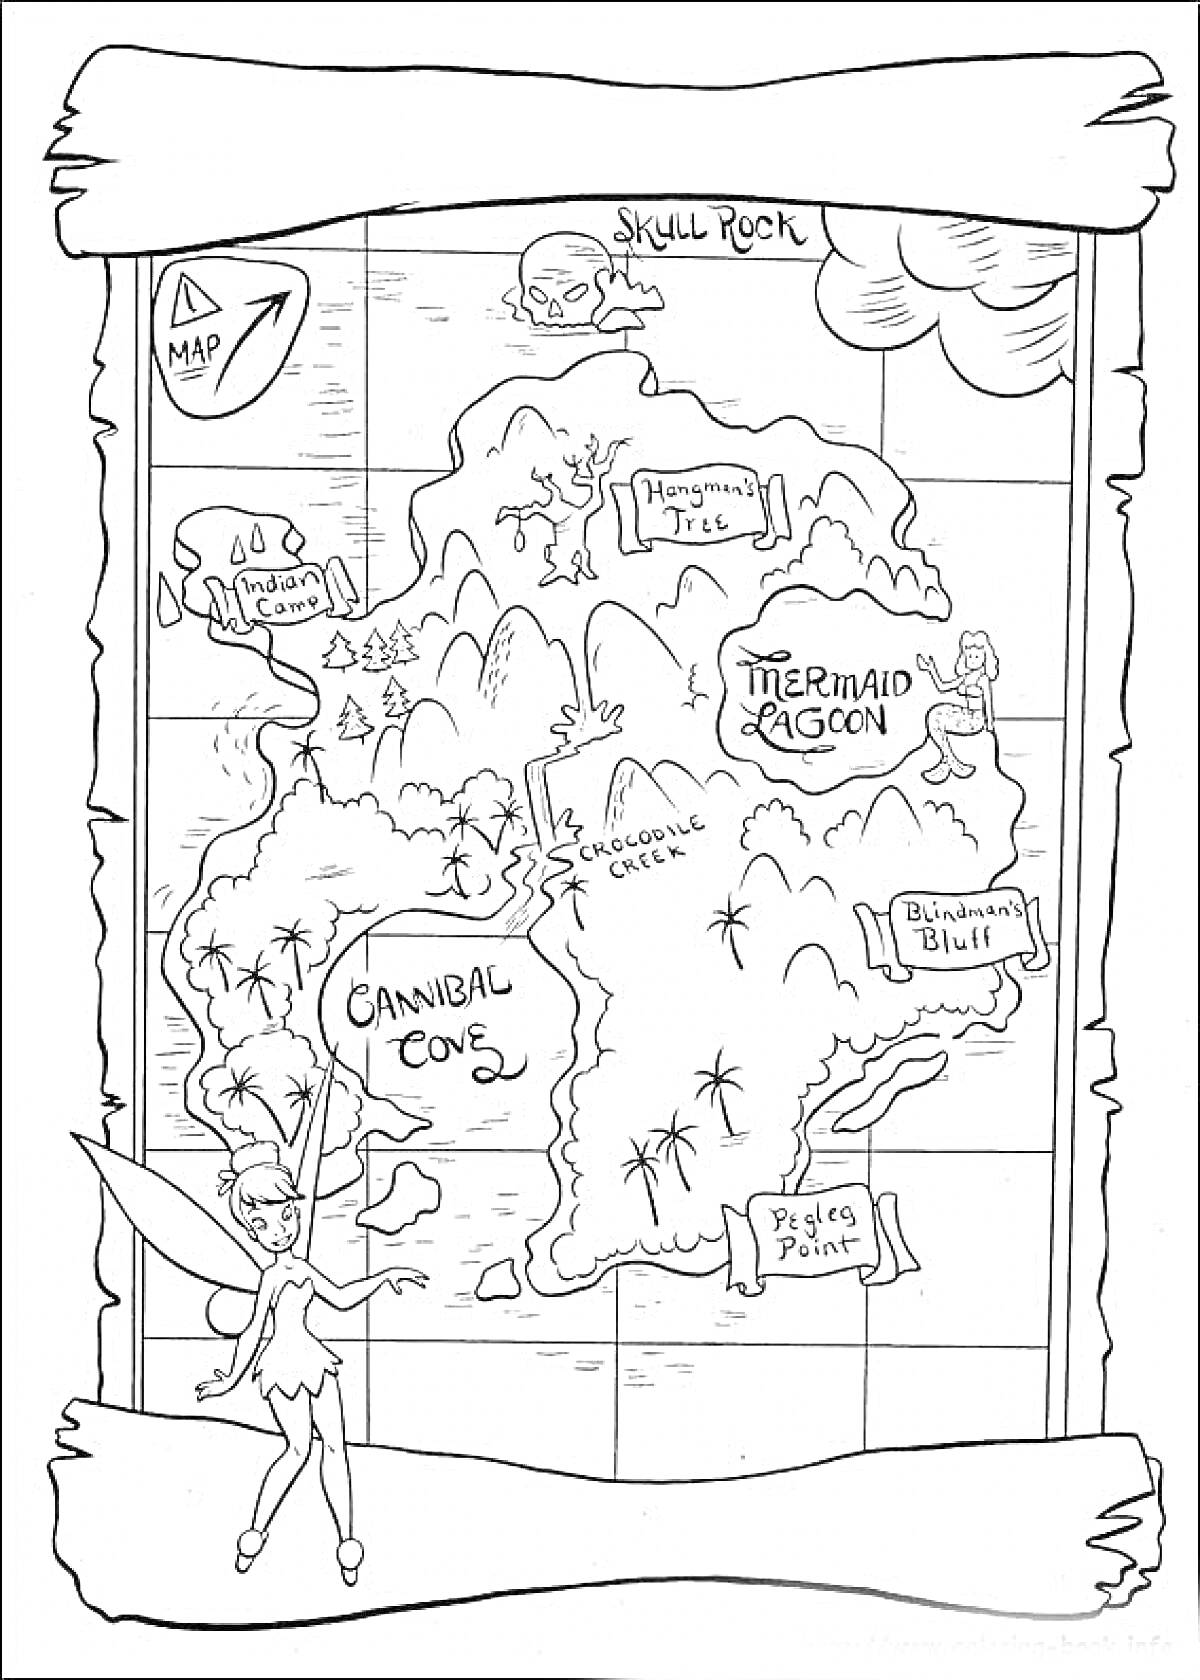 Карта Сокровищ с обозначенными локациями (Skull Rock, Hangman's Tree, Cannibal Cove, Mermaid Lagoon, Blackbeard's Bluff, Pistol's Point) и персонажем (волшебница) в левом нижнем углу